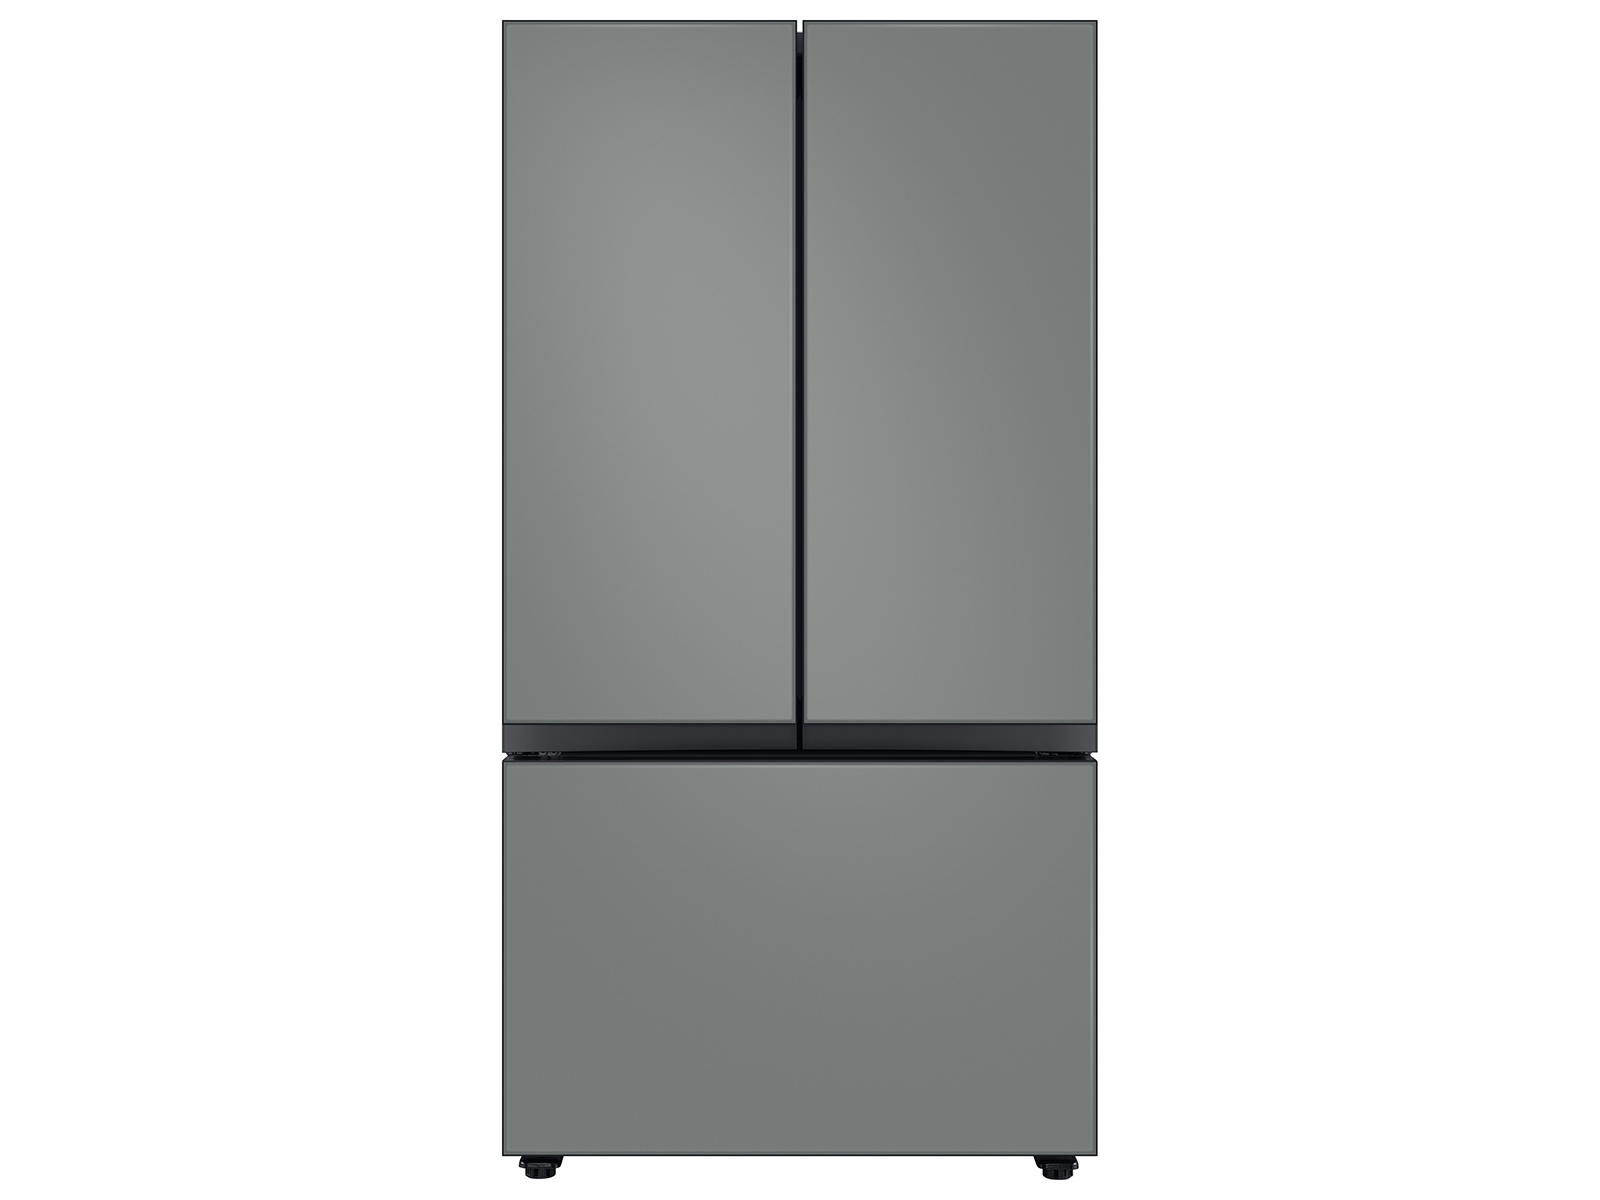 Samsung Bespoke 3-Door French Door Refrigerator (30 cu. ft.) with AutoFill Water Pitcher in Grey Glass(BNDL-1650464859347)